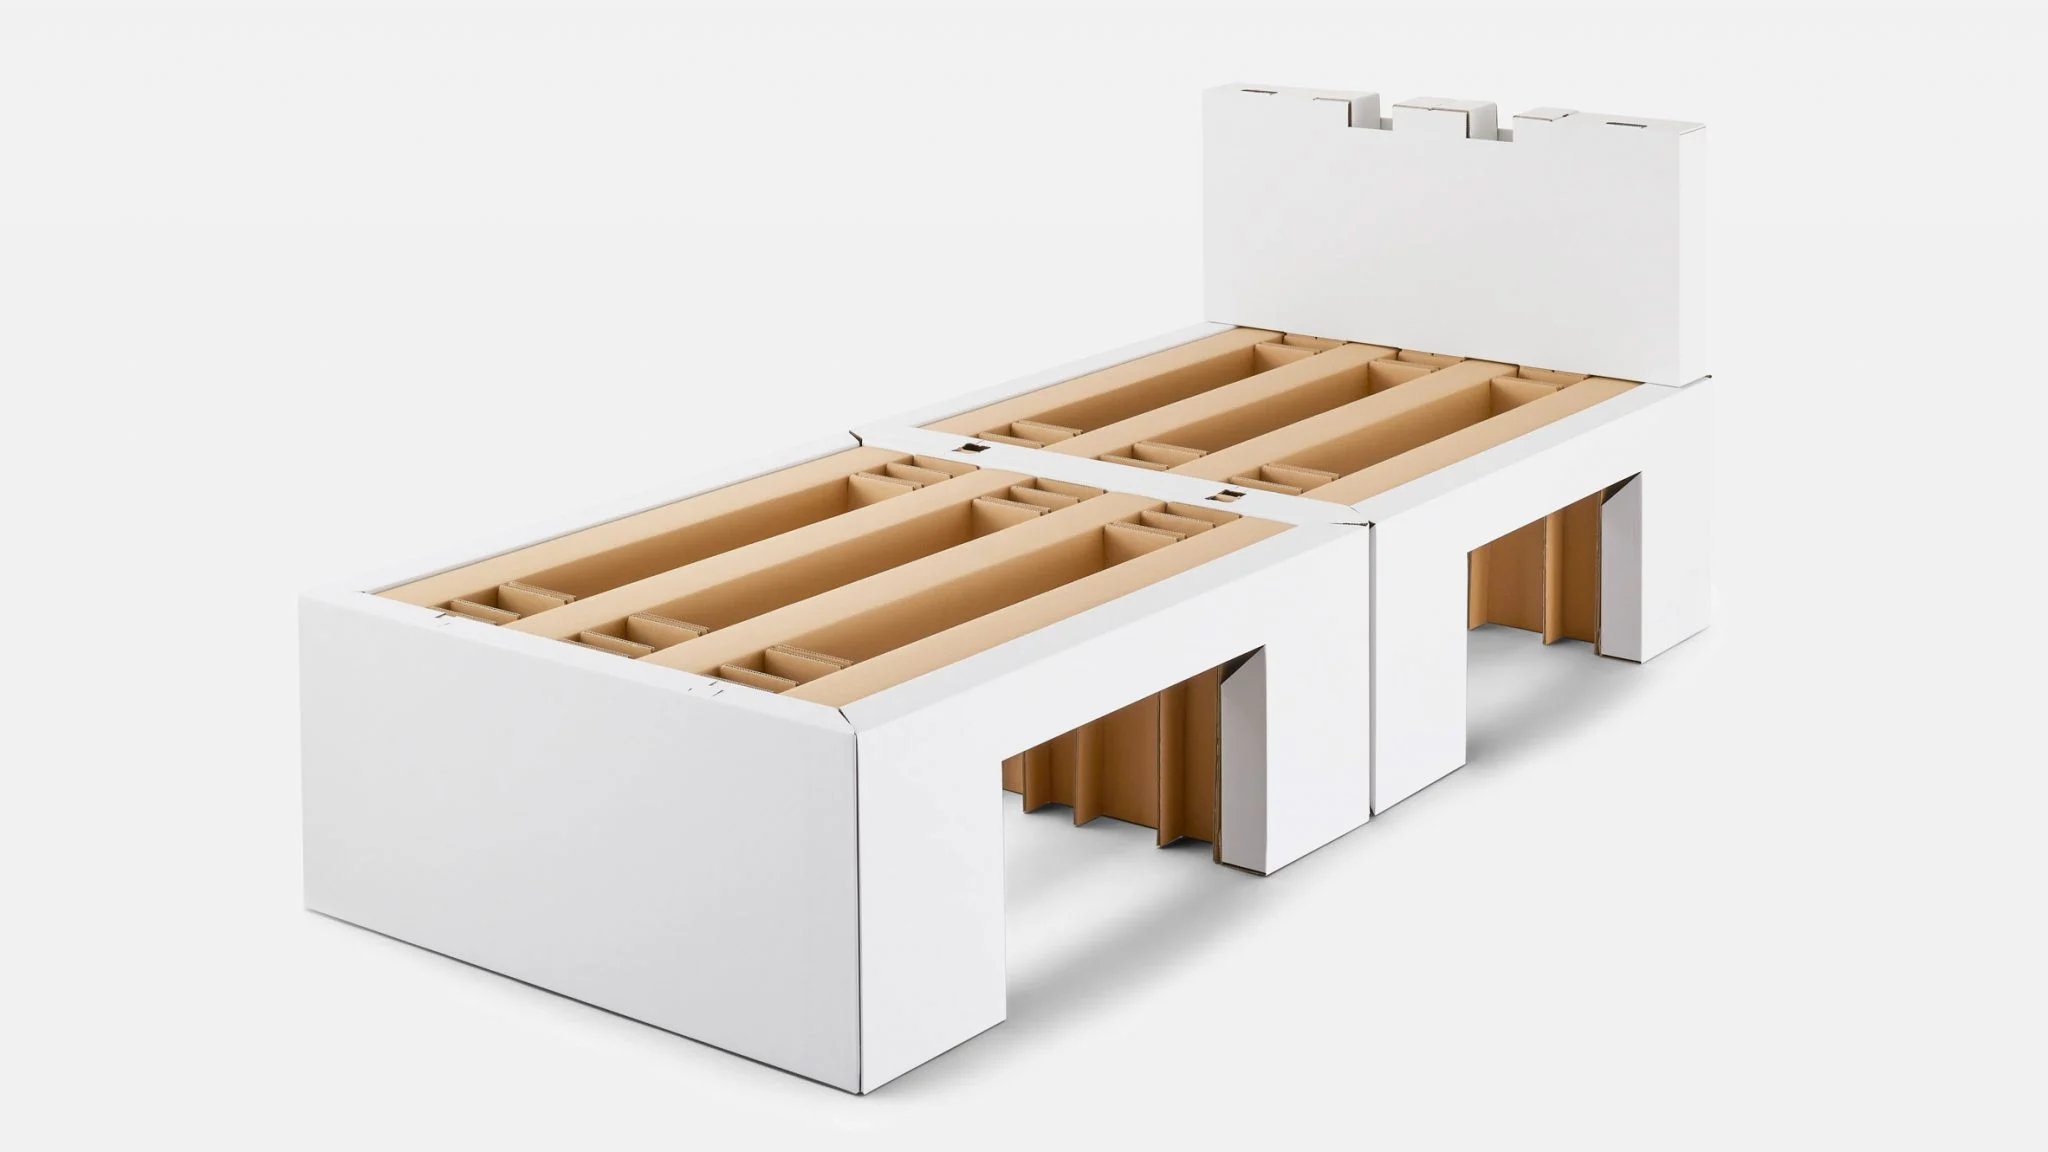 airweave-tokyo-olympics-bed-design-furniture-cardboard-hero-2048×1152-1